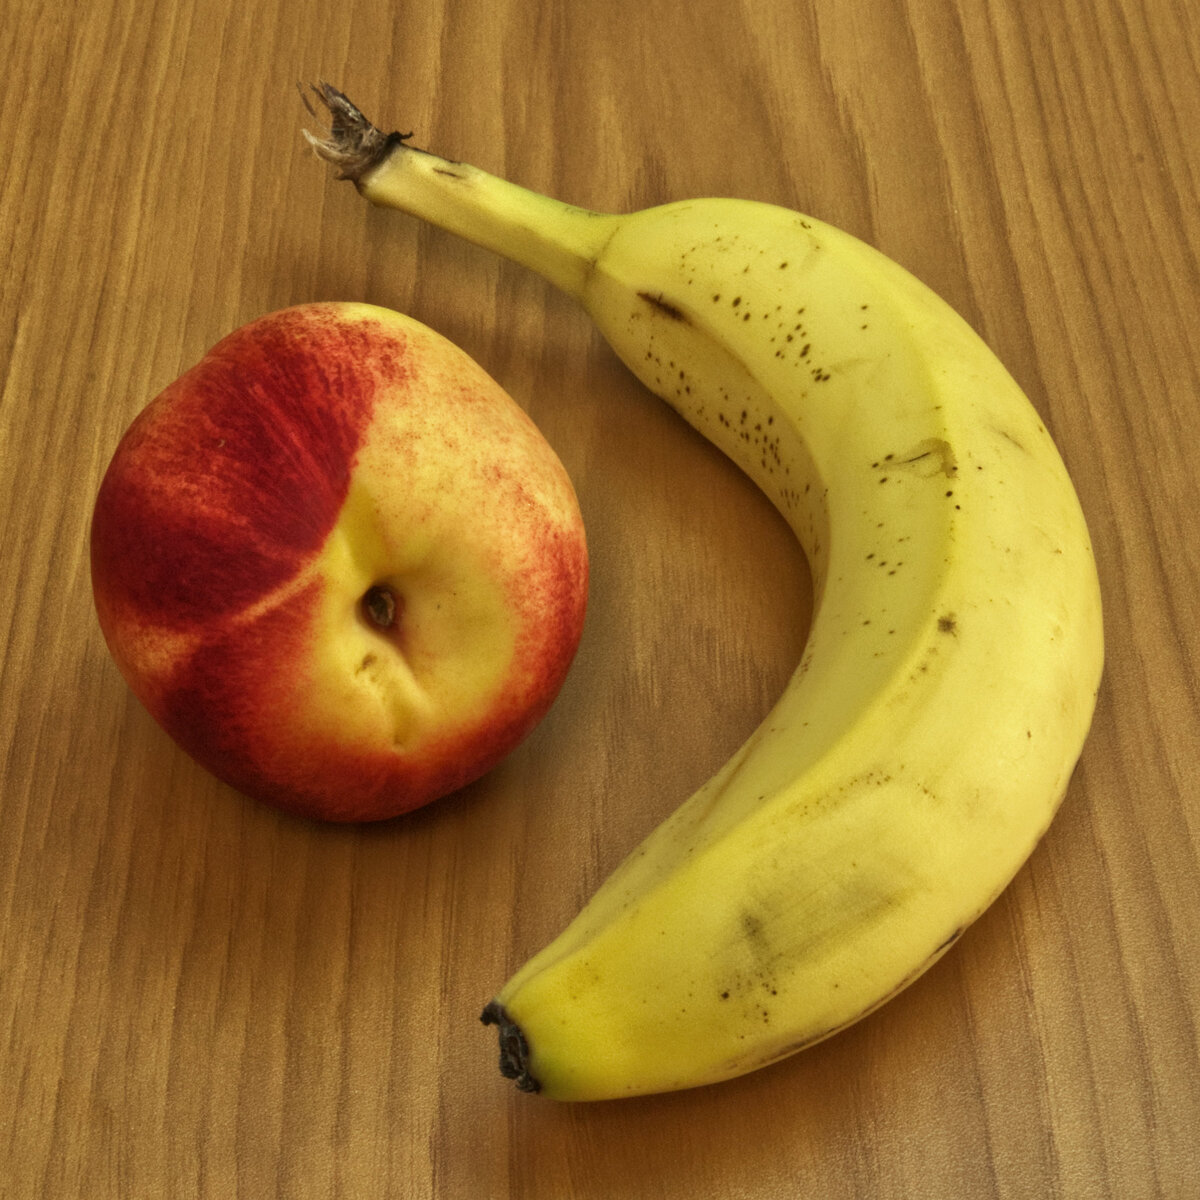 A Nectarine and a Banana